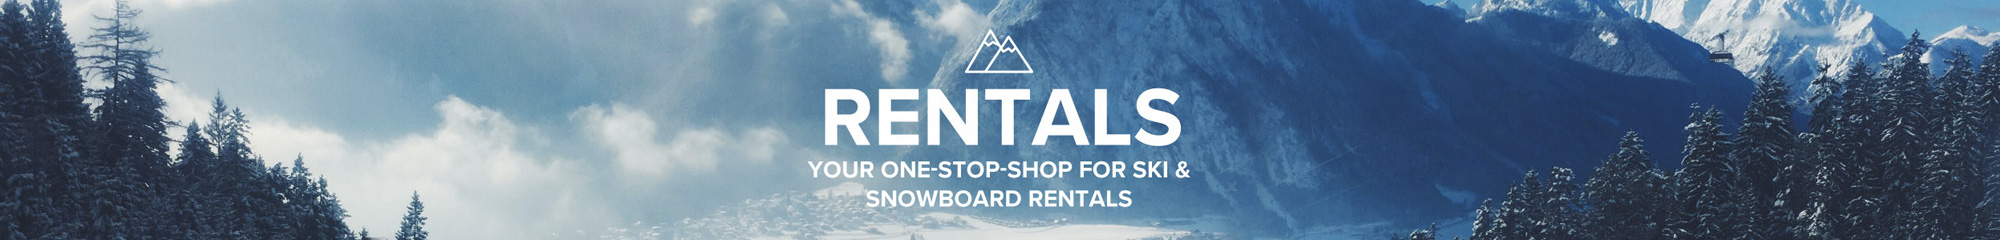 Ski & Snowboard Rentals at Sun & Ski